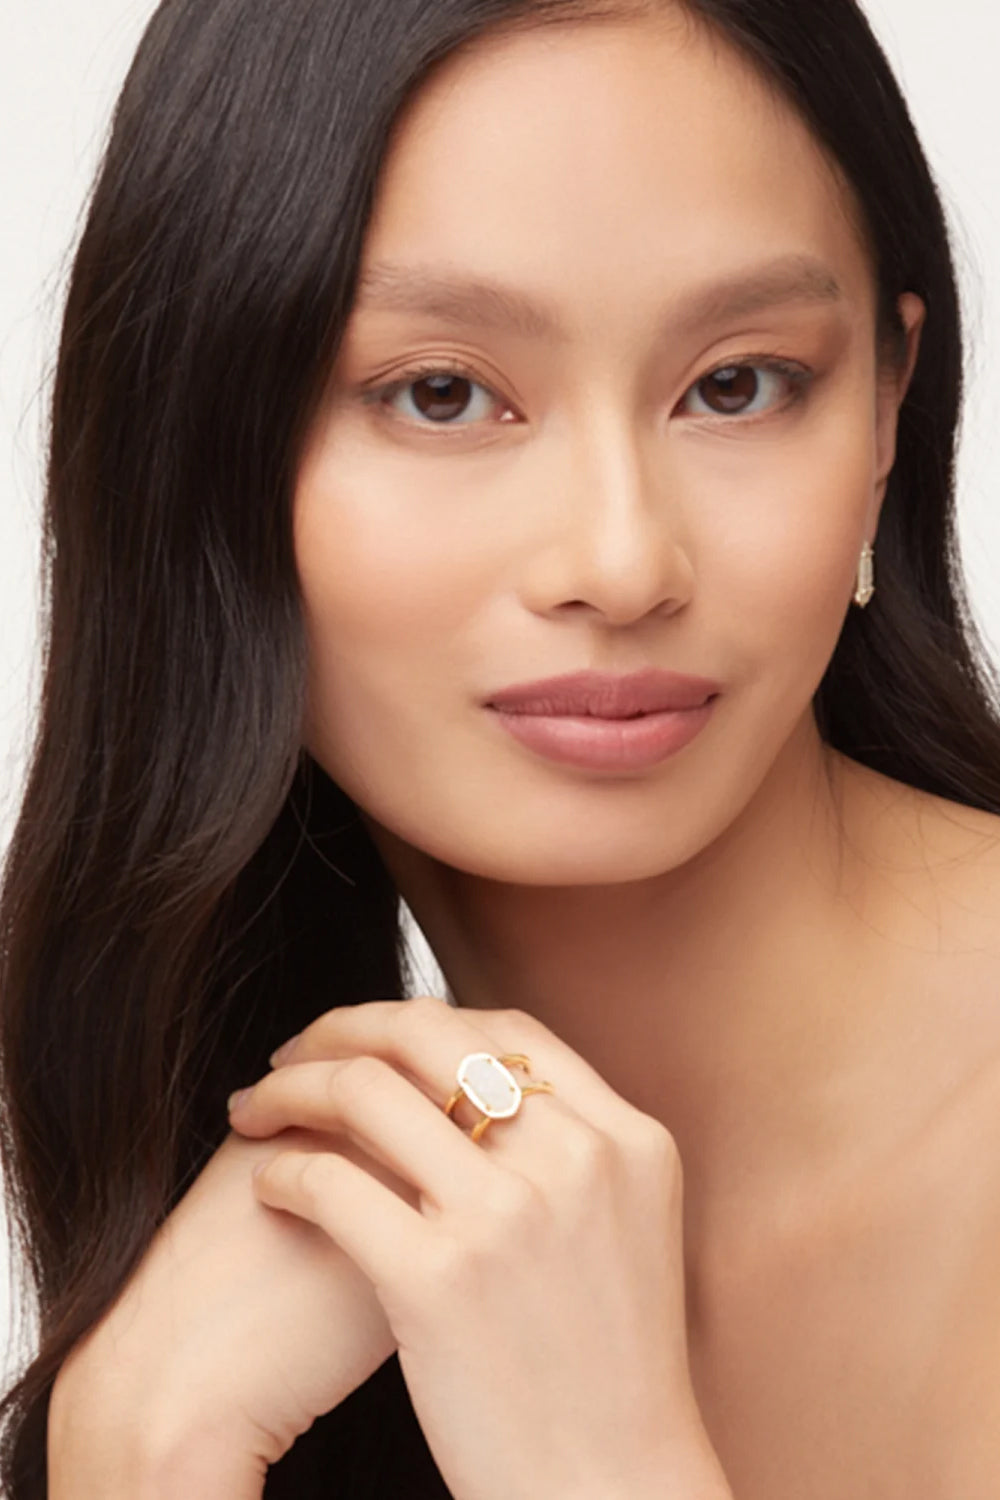 Kendra Scott: Elyse Ring Gold - Iridescent Drusy | Makk Fashions